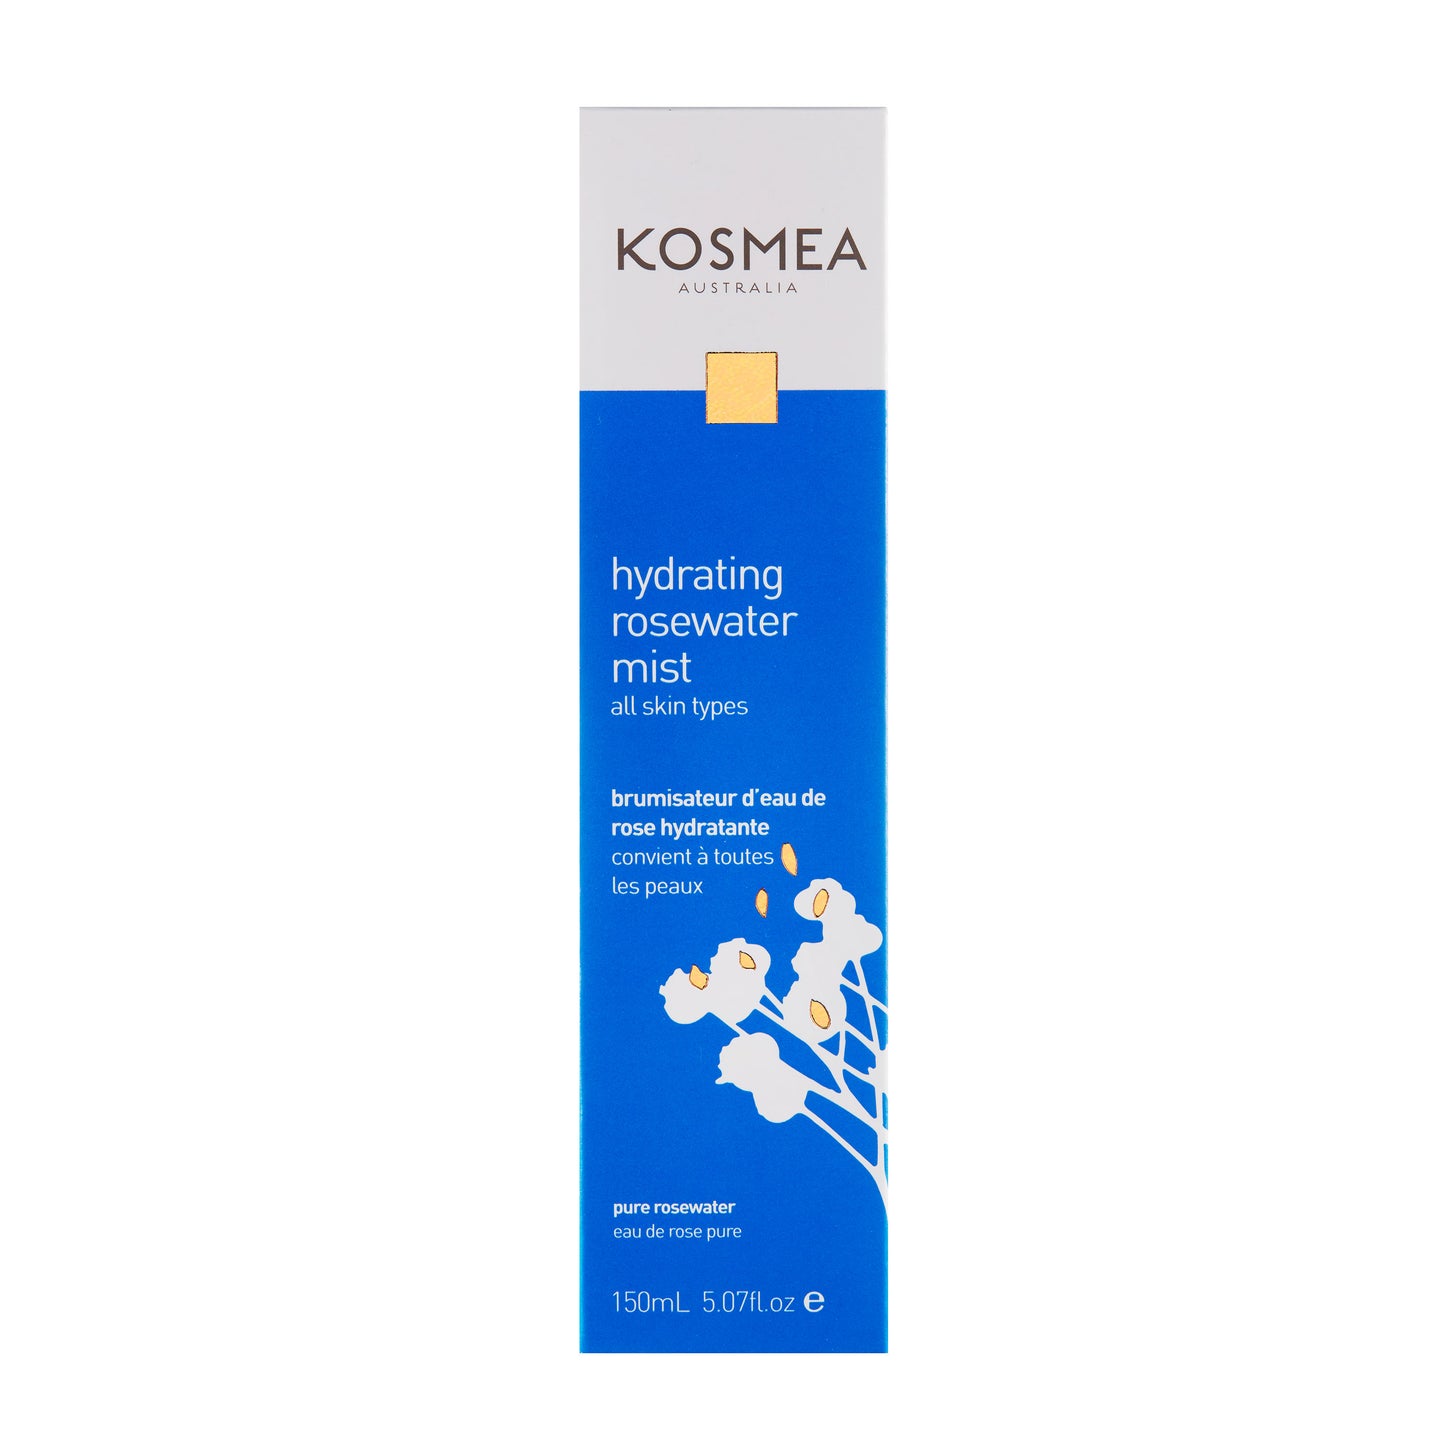 Kosmea Australia Hydrating Rosewater Mist 150ml Packaging